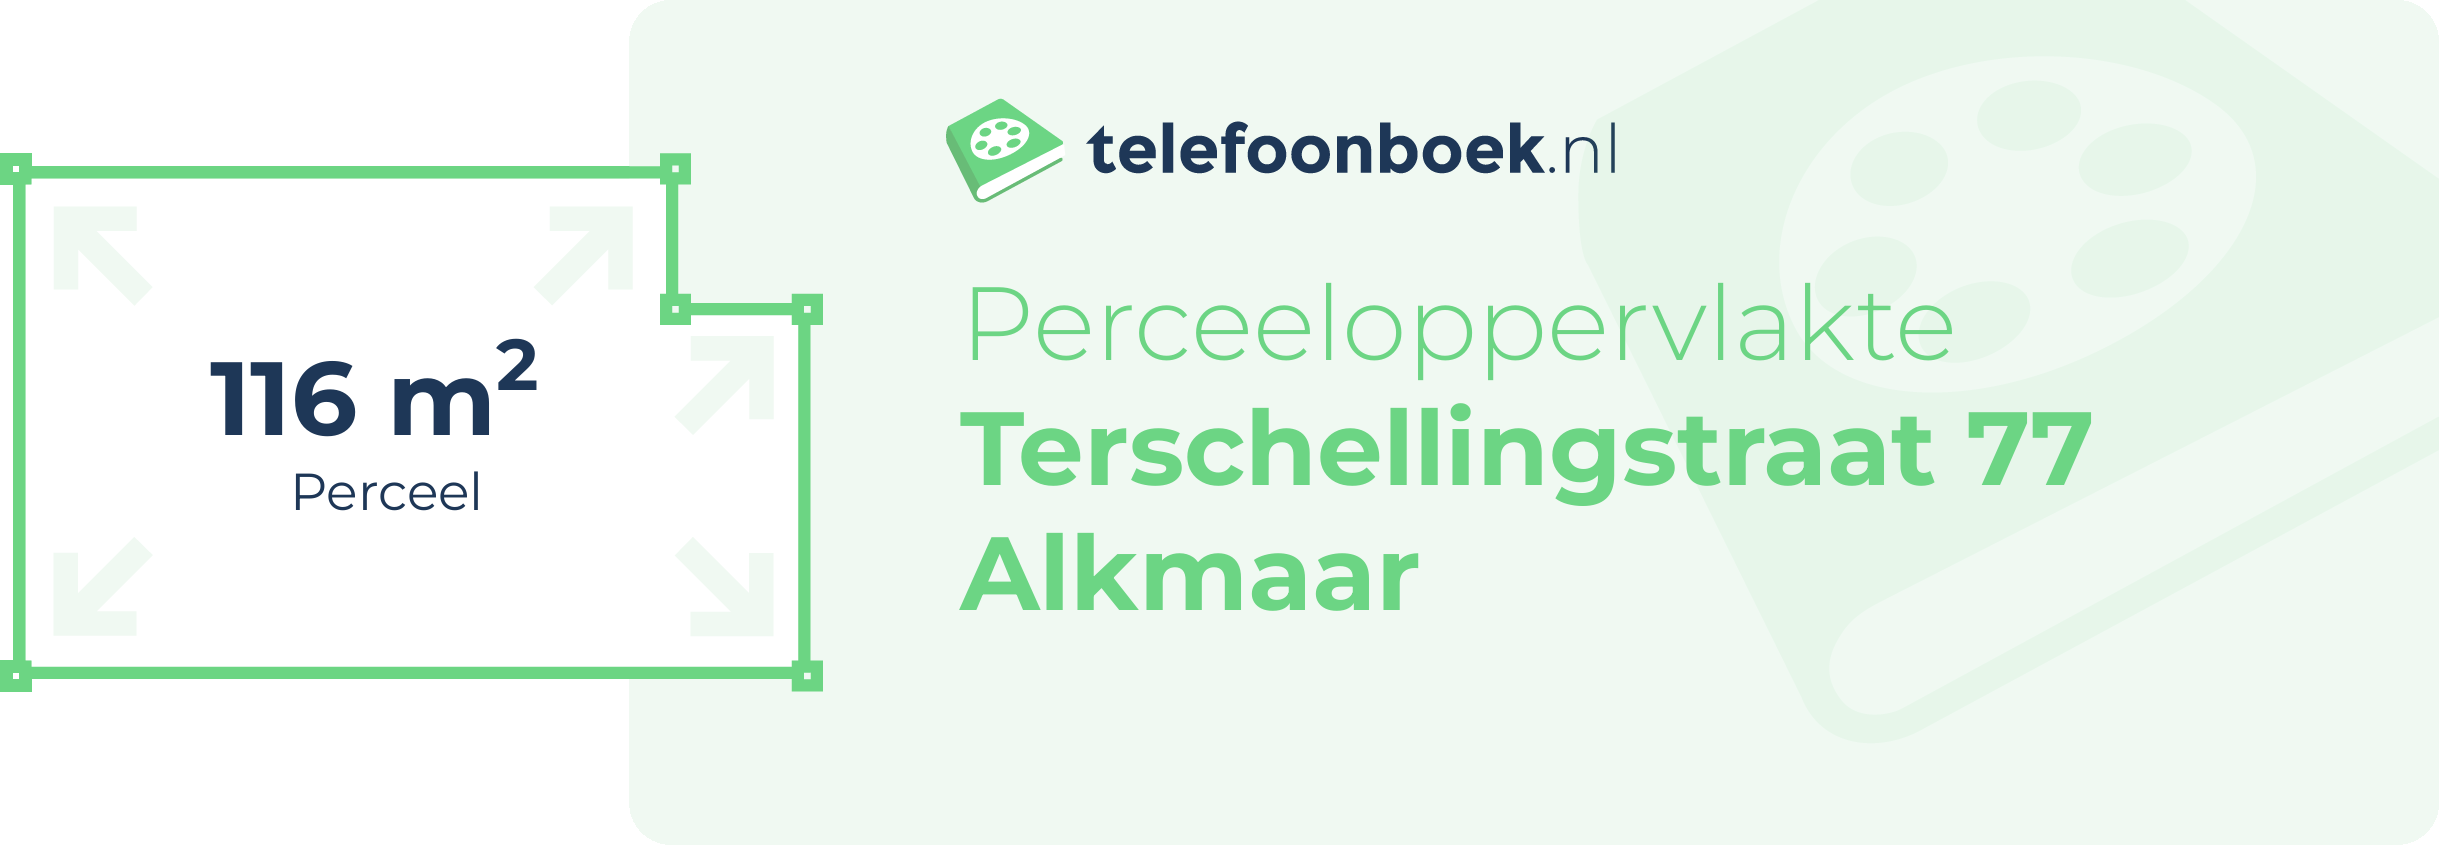 Perceeloppervlakte Terschellingstraat 77 Alkmaar